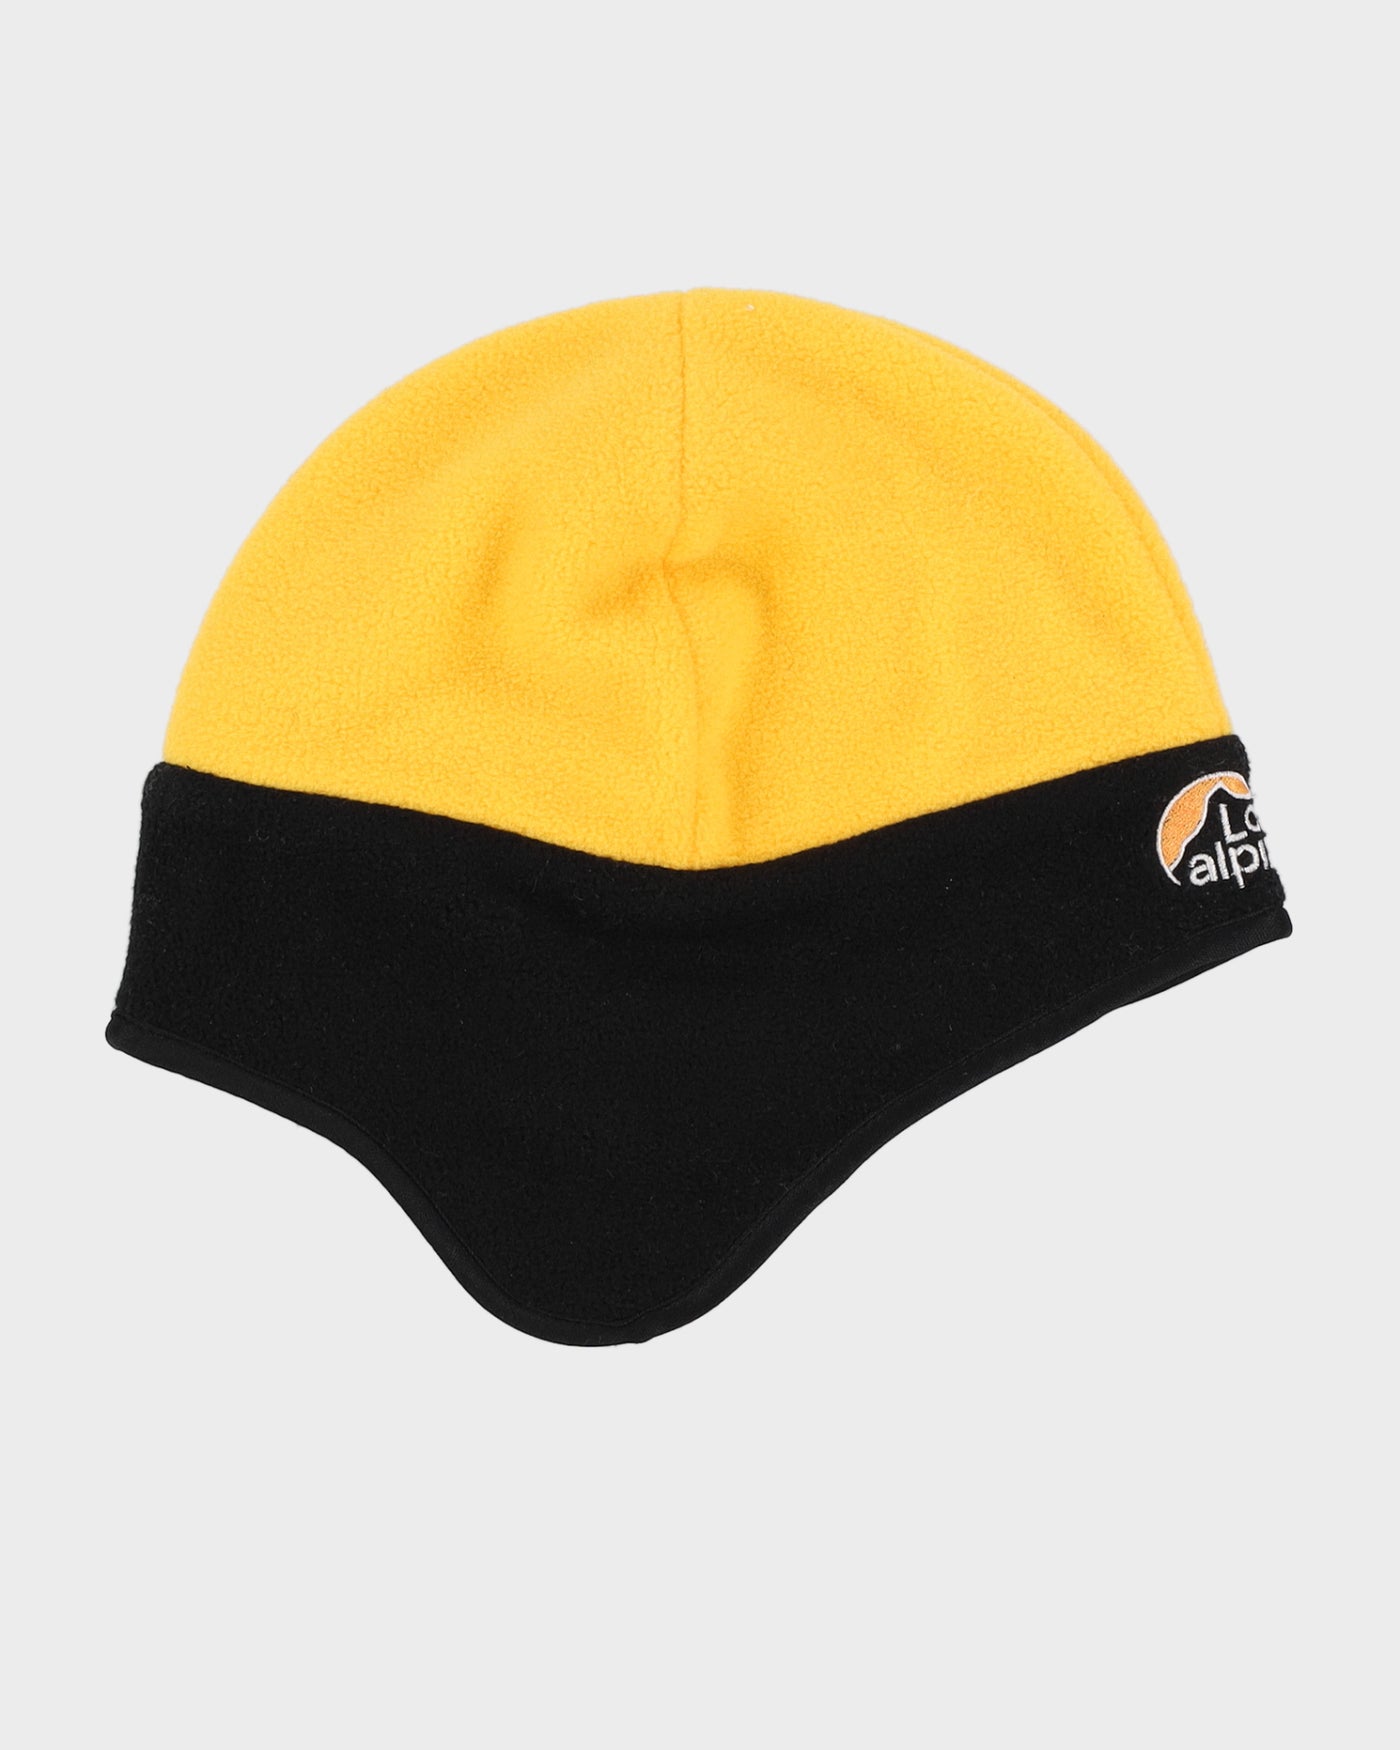 Lowe Alpine Yellow / Black Hat